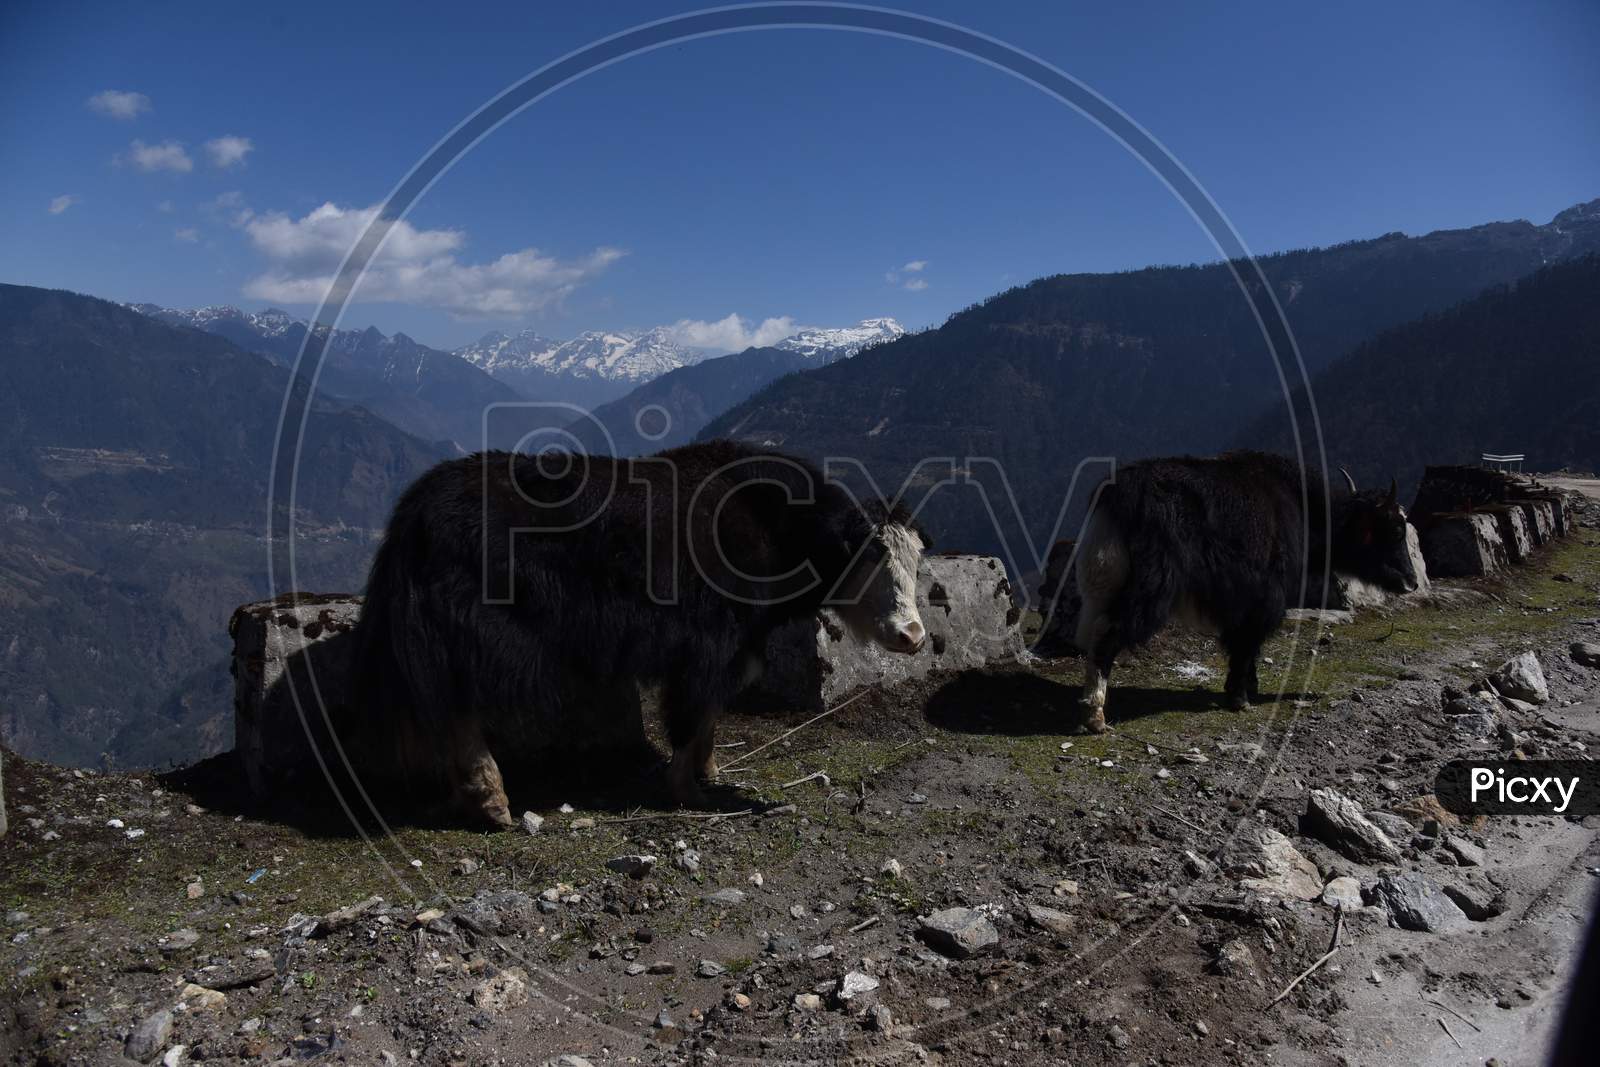 Wild Yak On The Mountains of Arunachal Pradesh